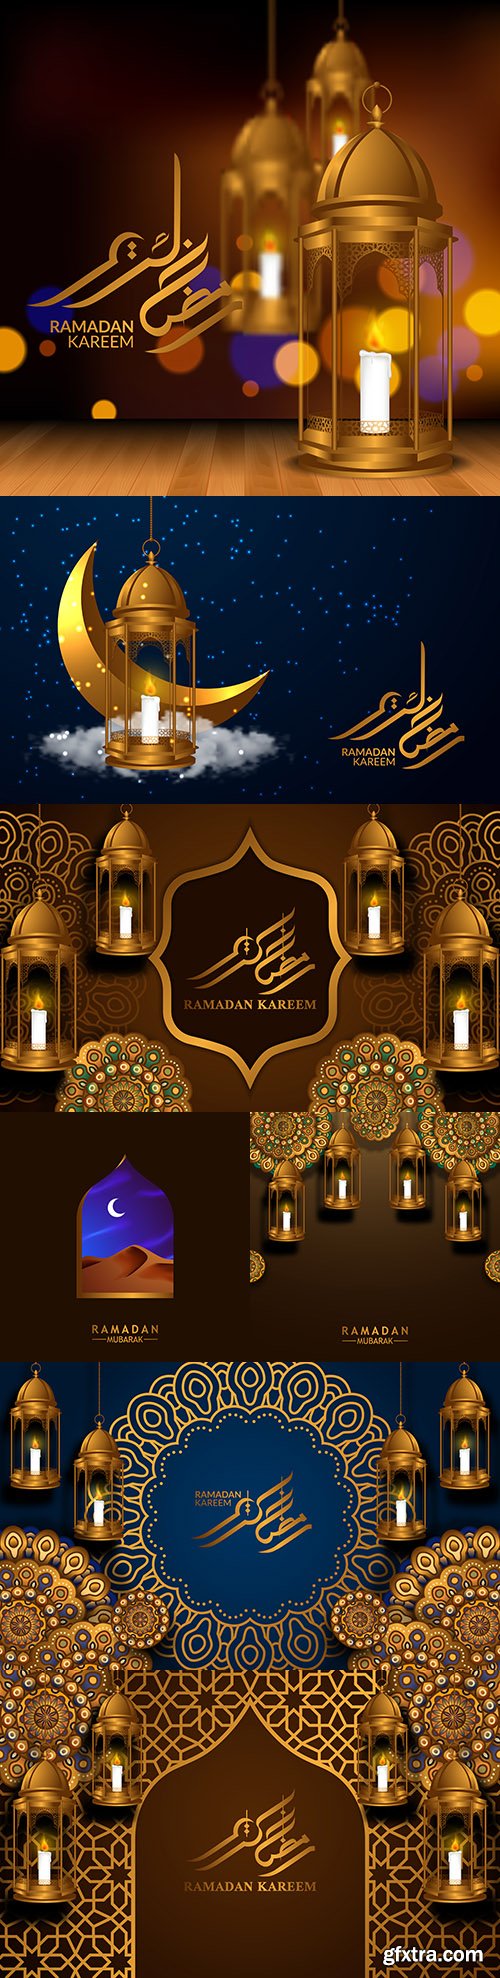 Kareem Ramadan traditional holiday illustrations 12